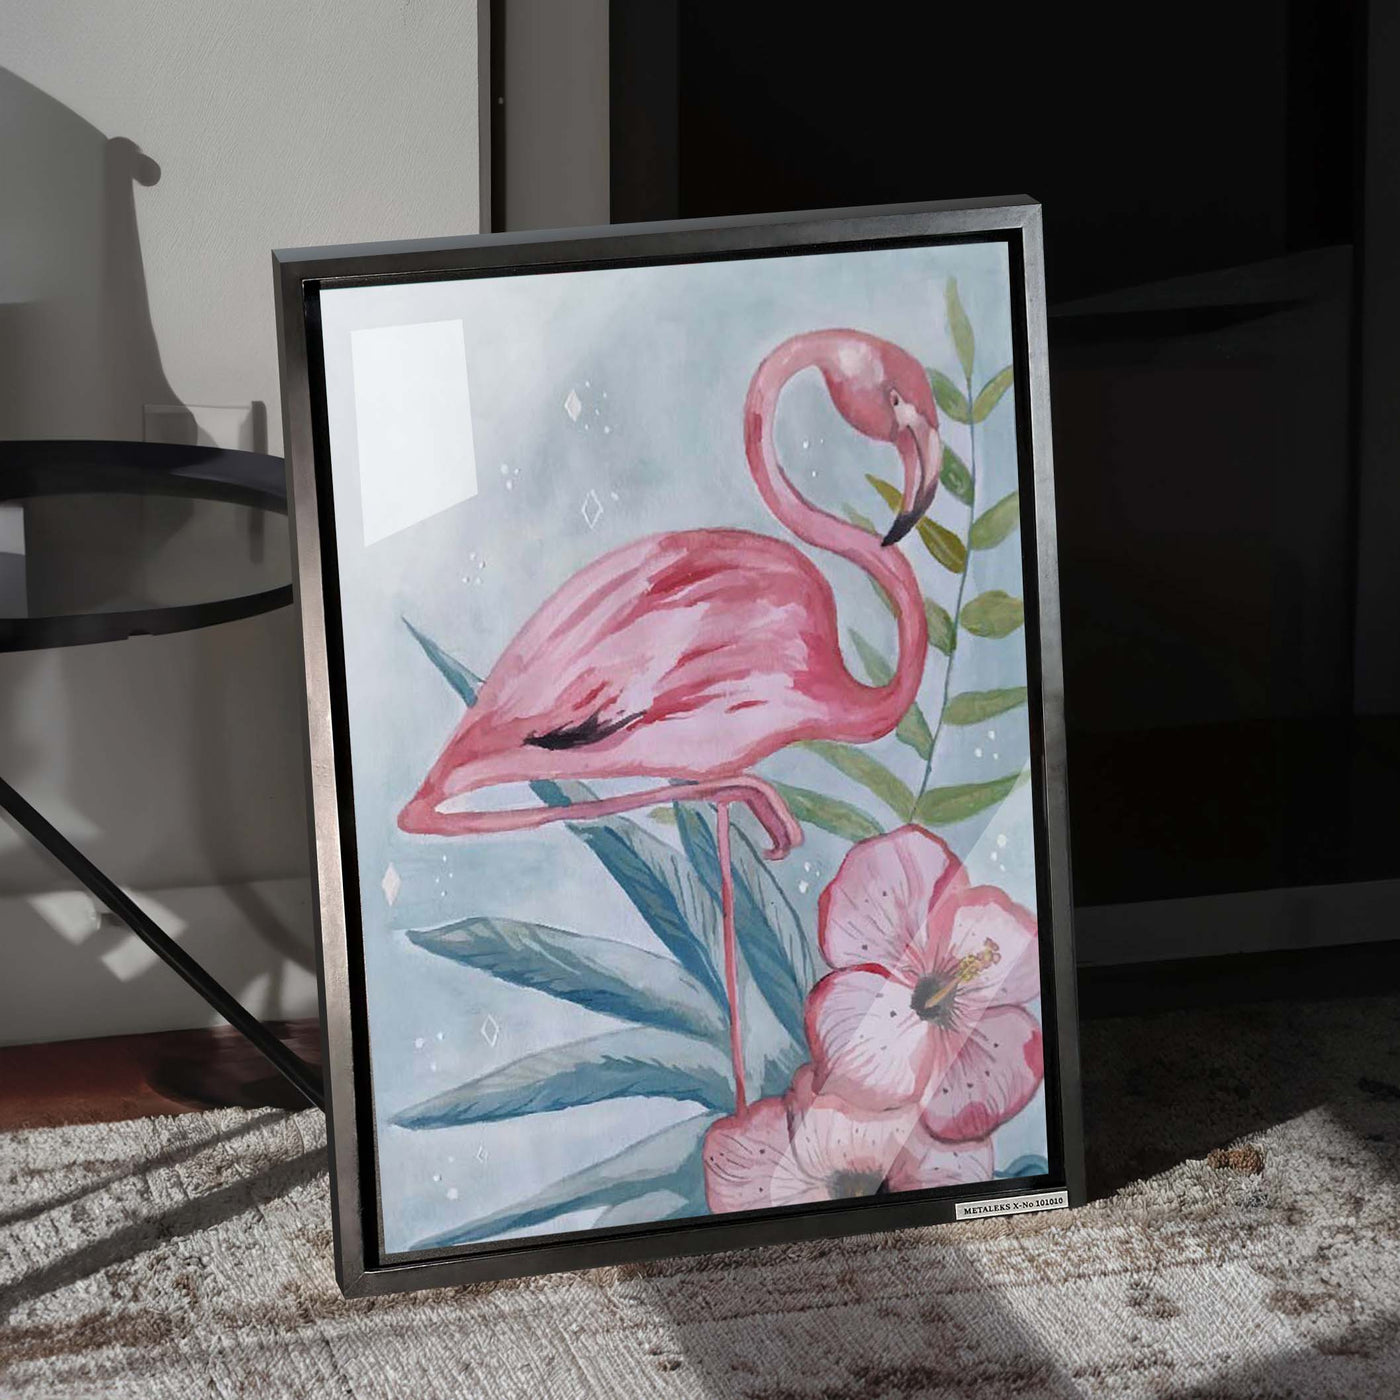 Pink Flamingo- ARTWORK BY katysart.artis